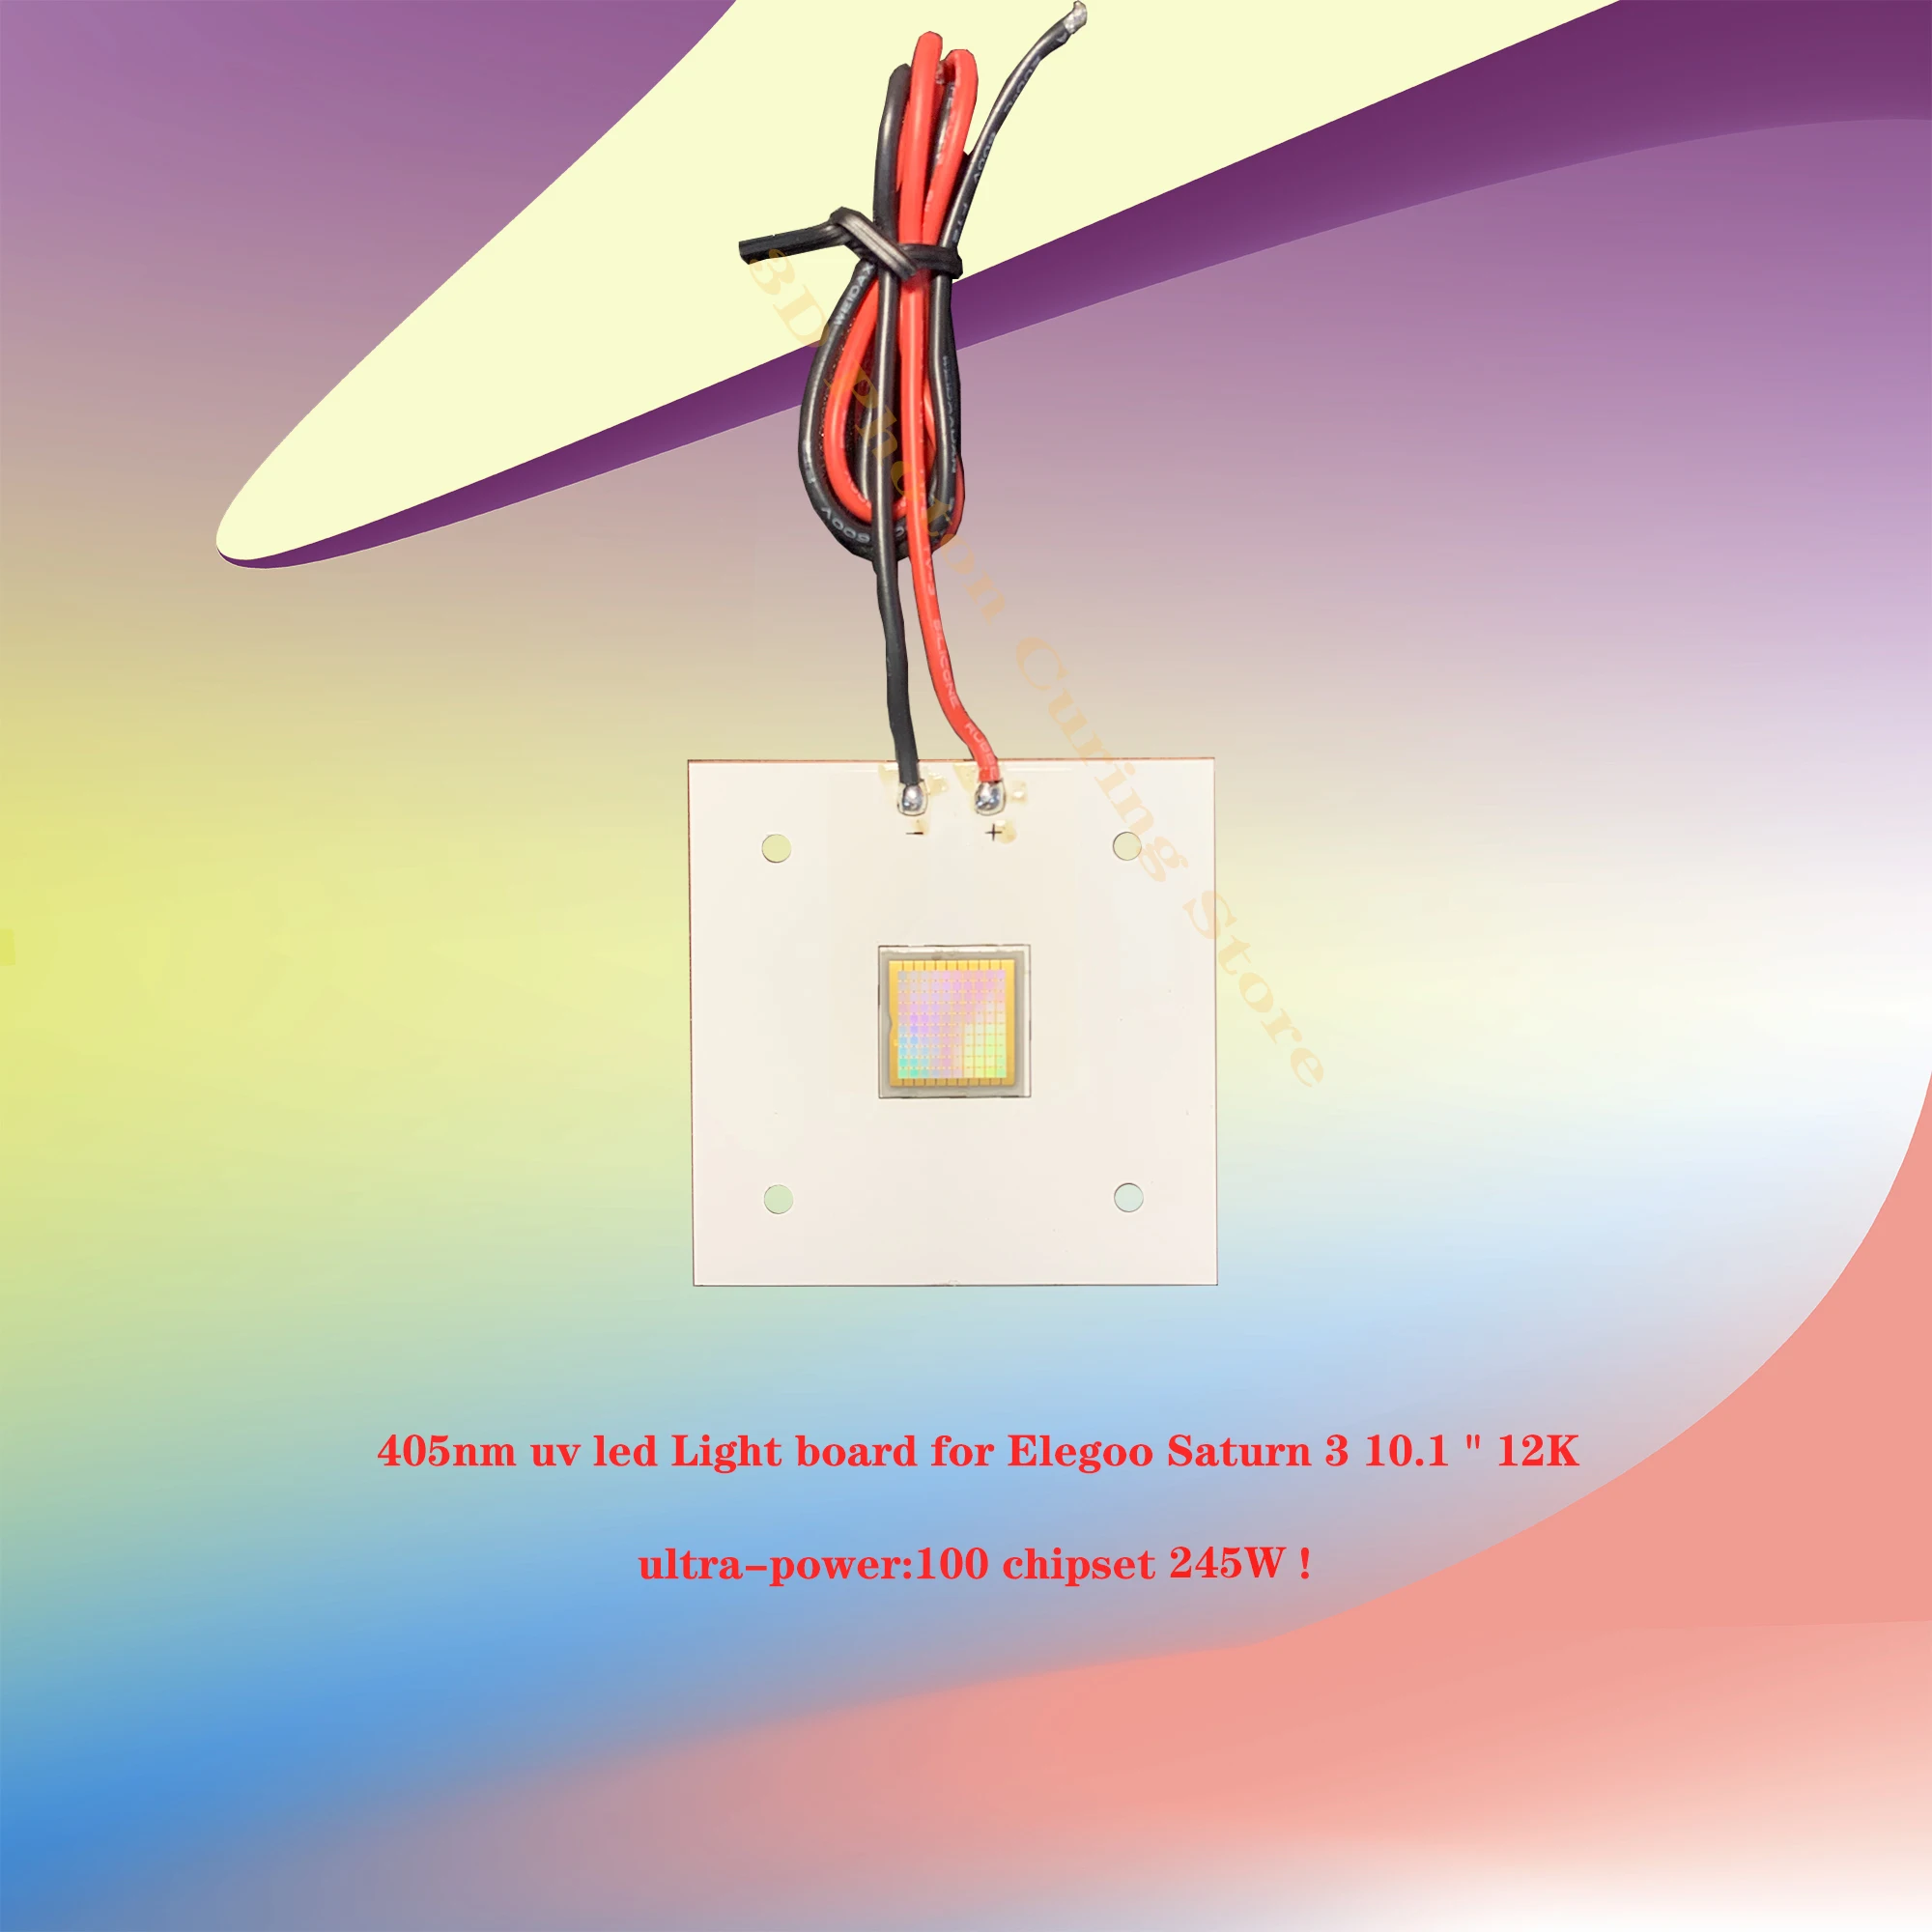 

405nm uv led Light board for Elegoo Saturn 3 10.1＂12K ultra-power 100 chipset 245W UV optical curing COB solution 3d printer led